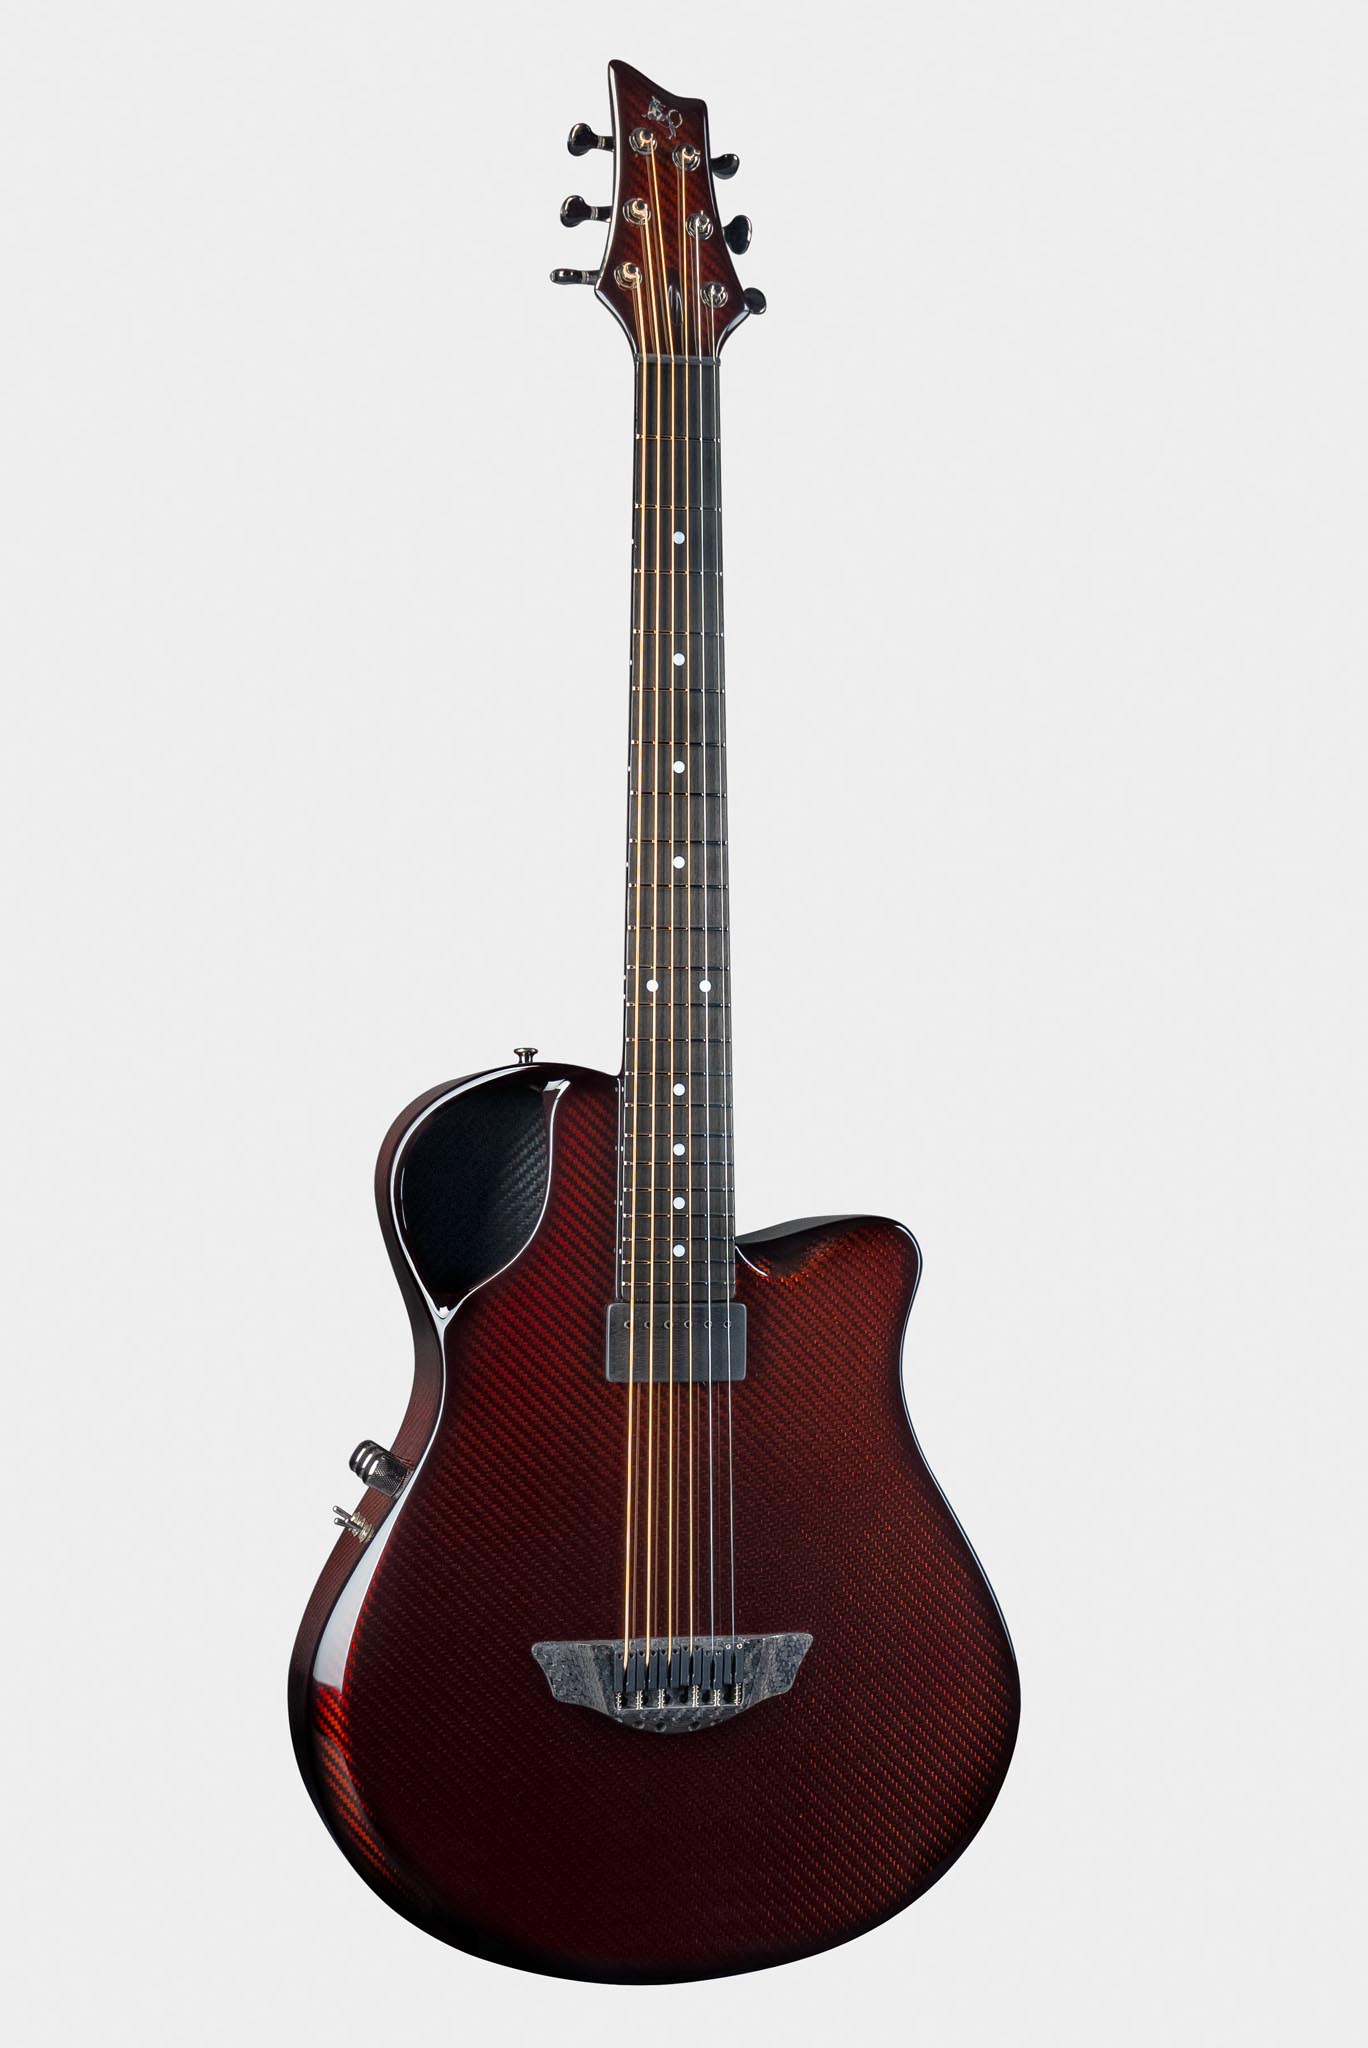 Red Emerald Guitars X10 model